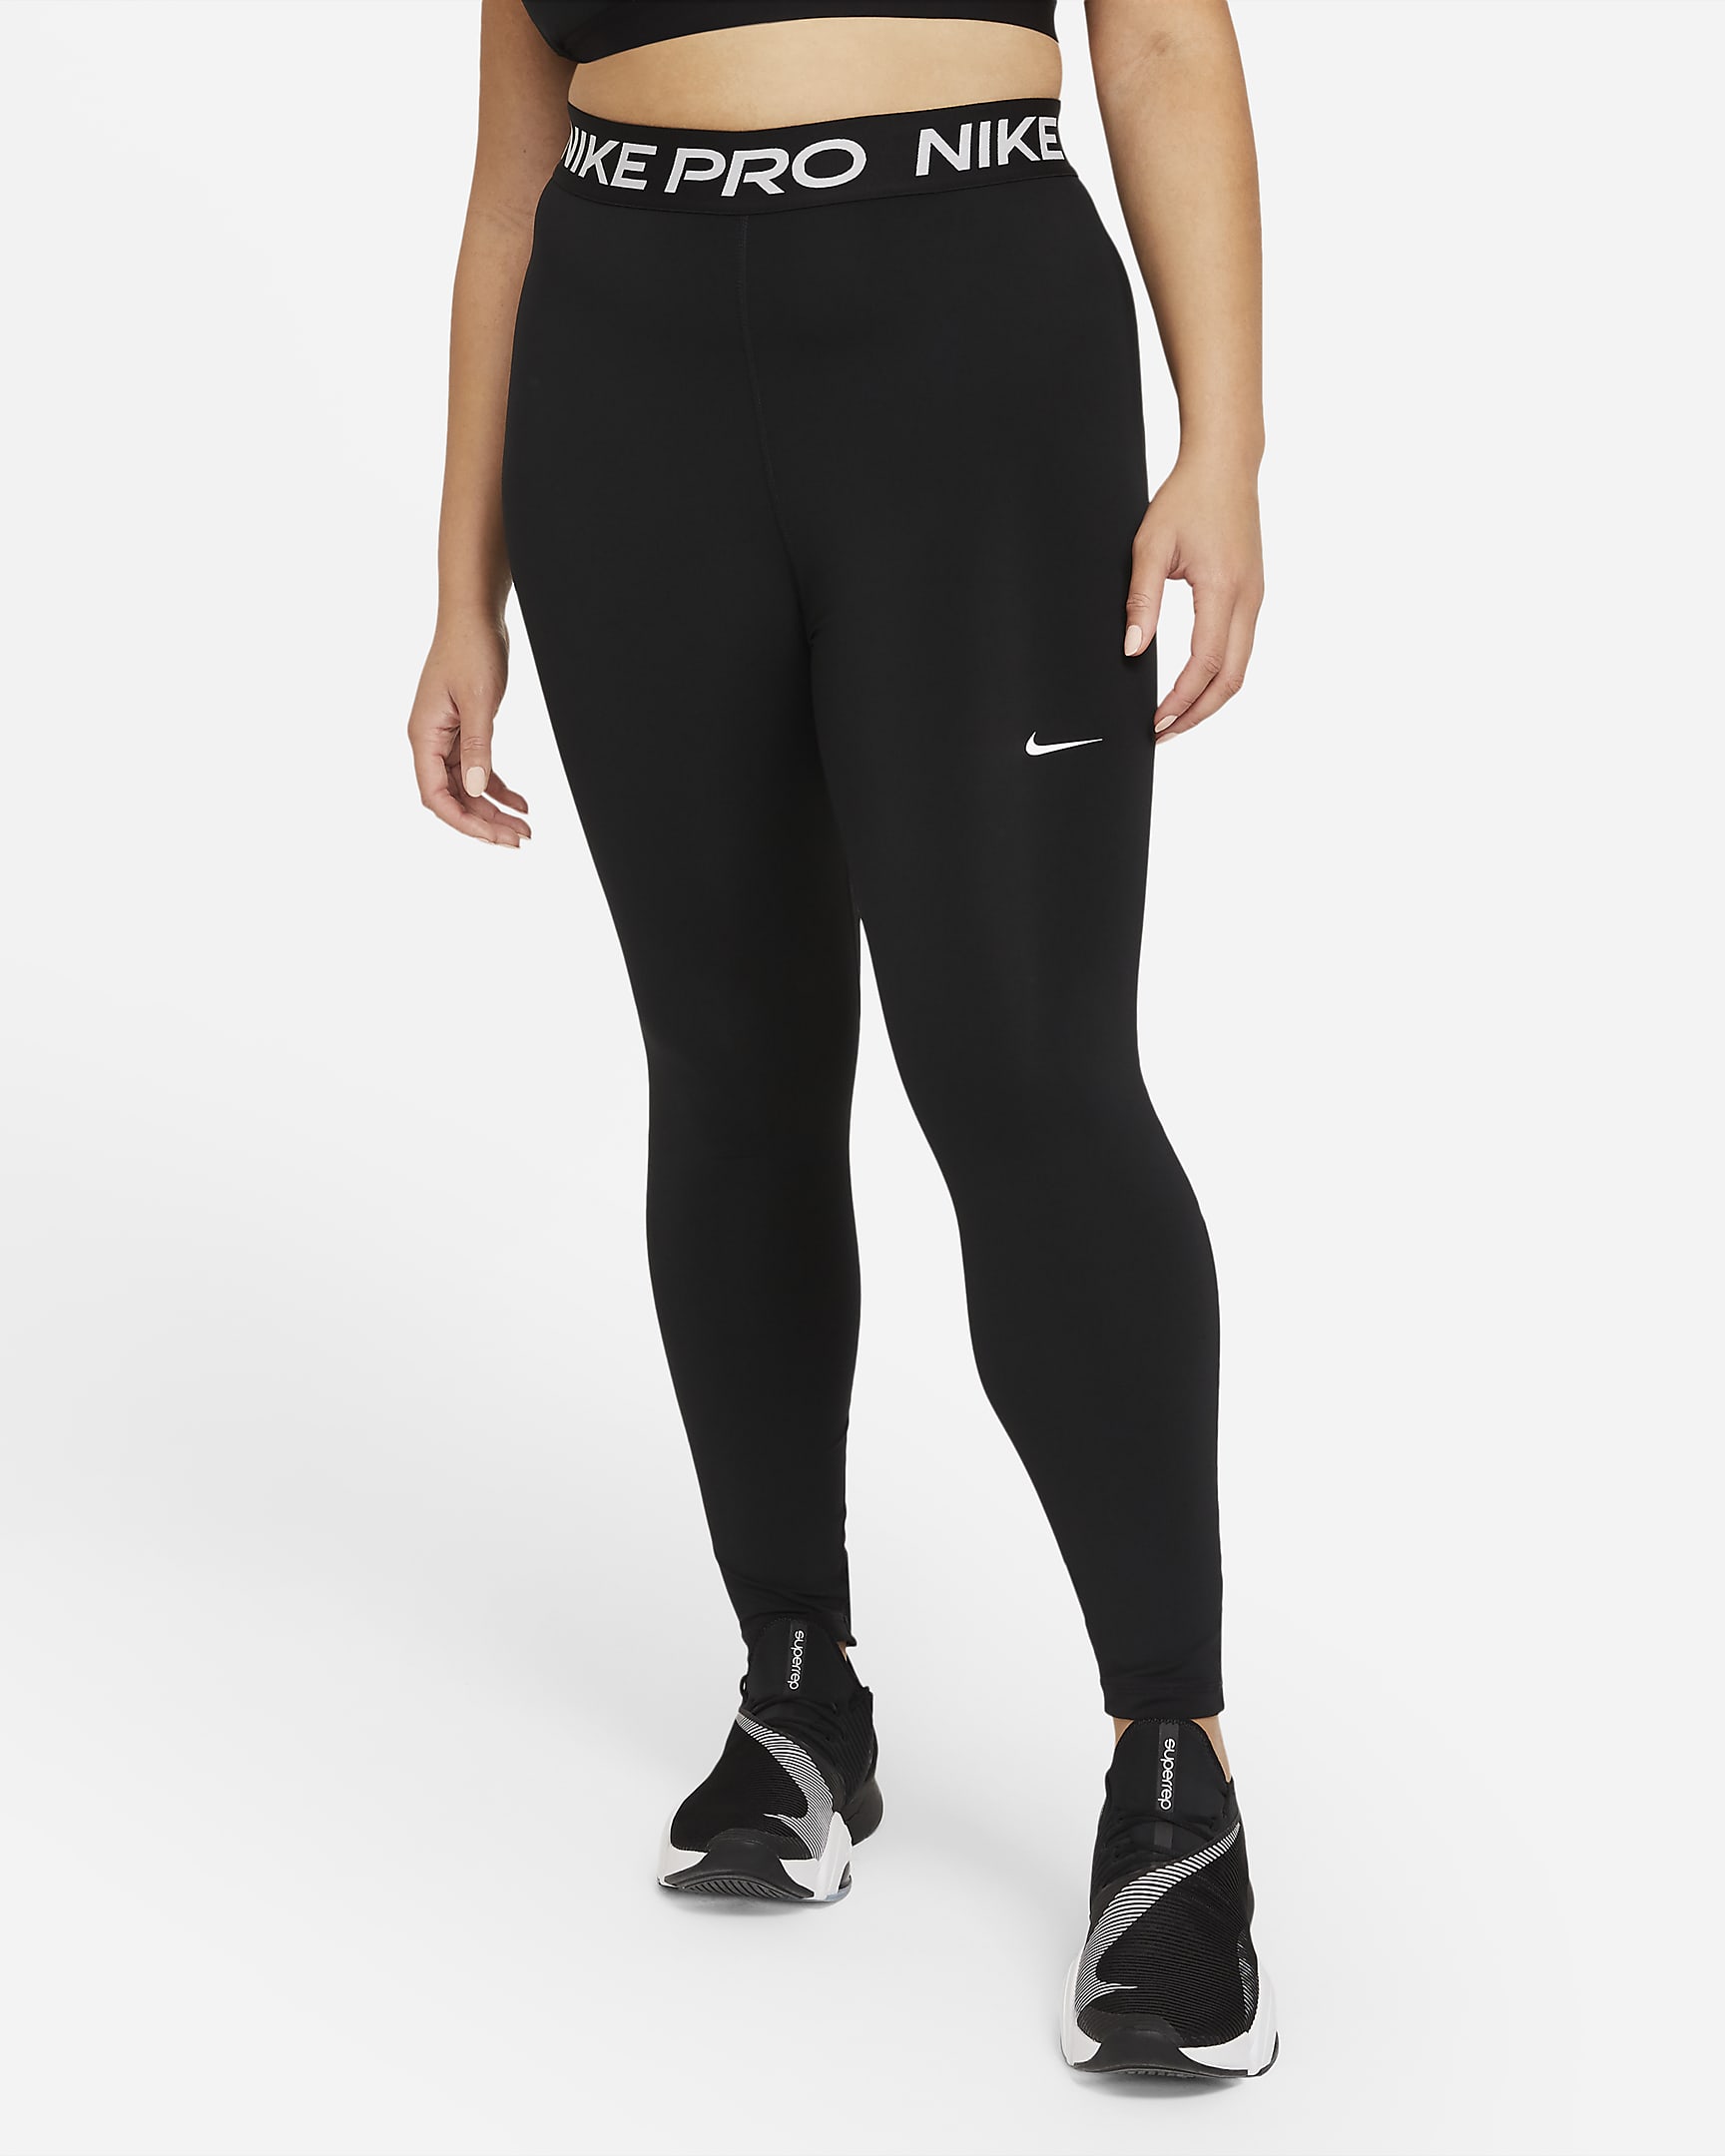 Leggings Nike Pro 365 (Plus size) - Donna - Nero/Bianco